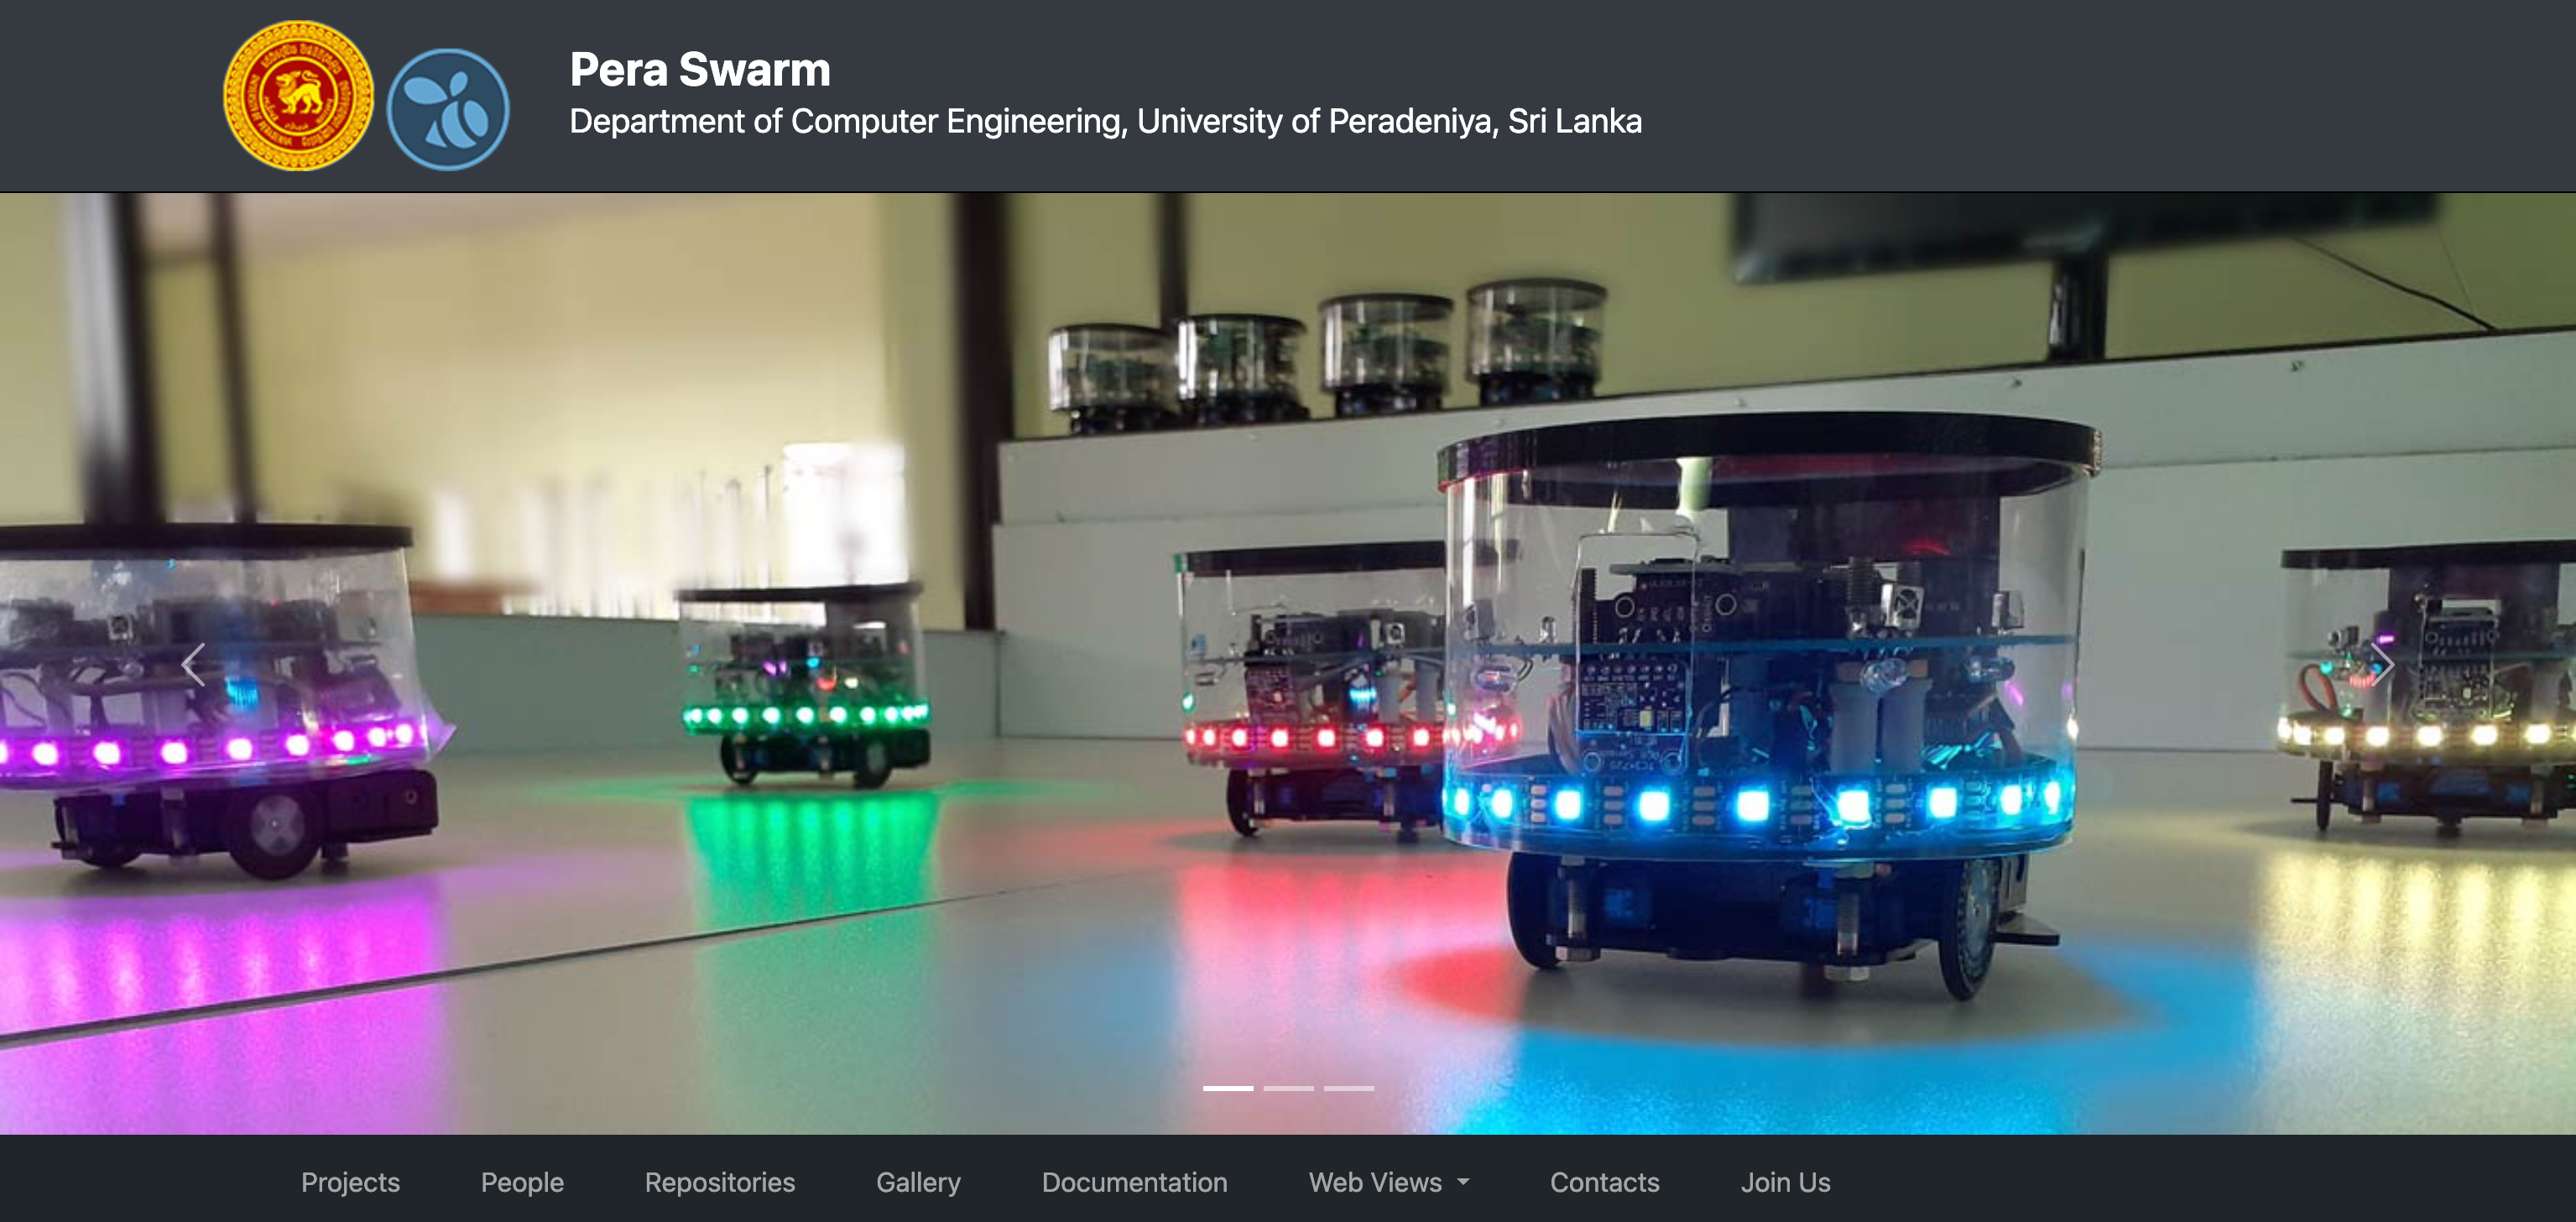 Website Launch: pera-swarm.ce.pdn.ac.lk